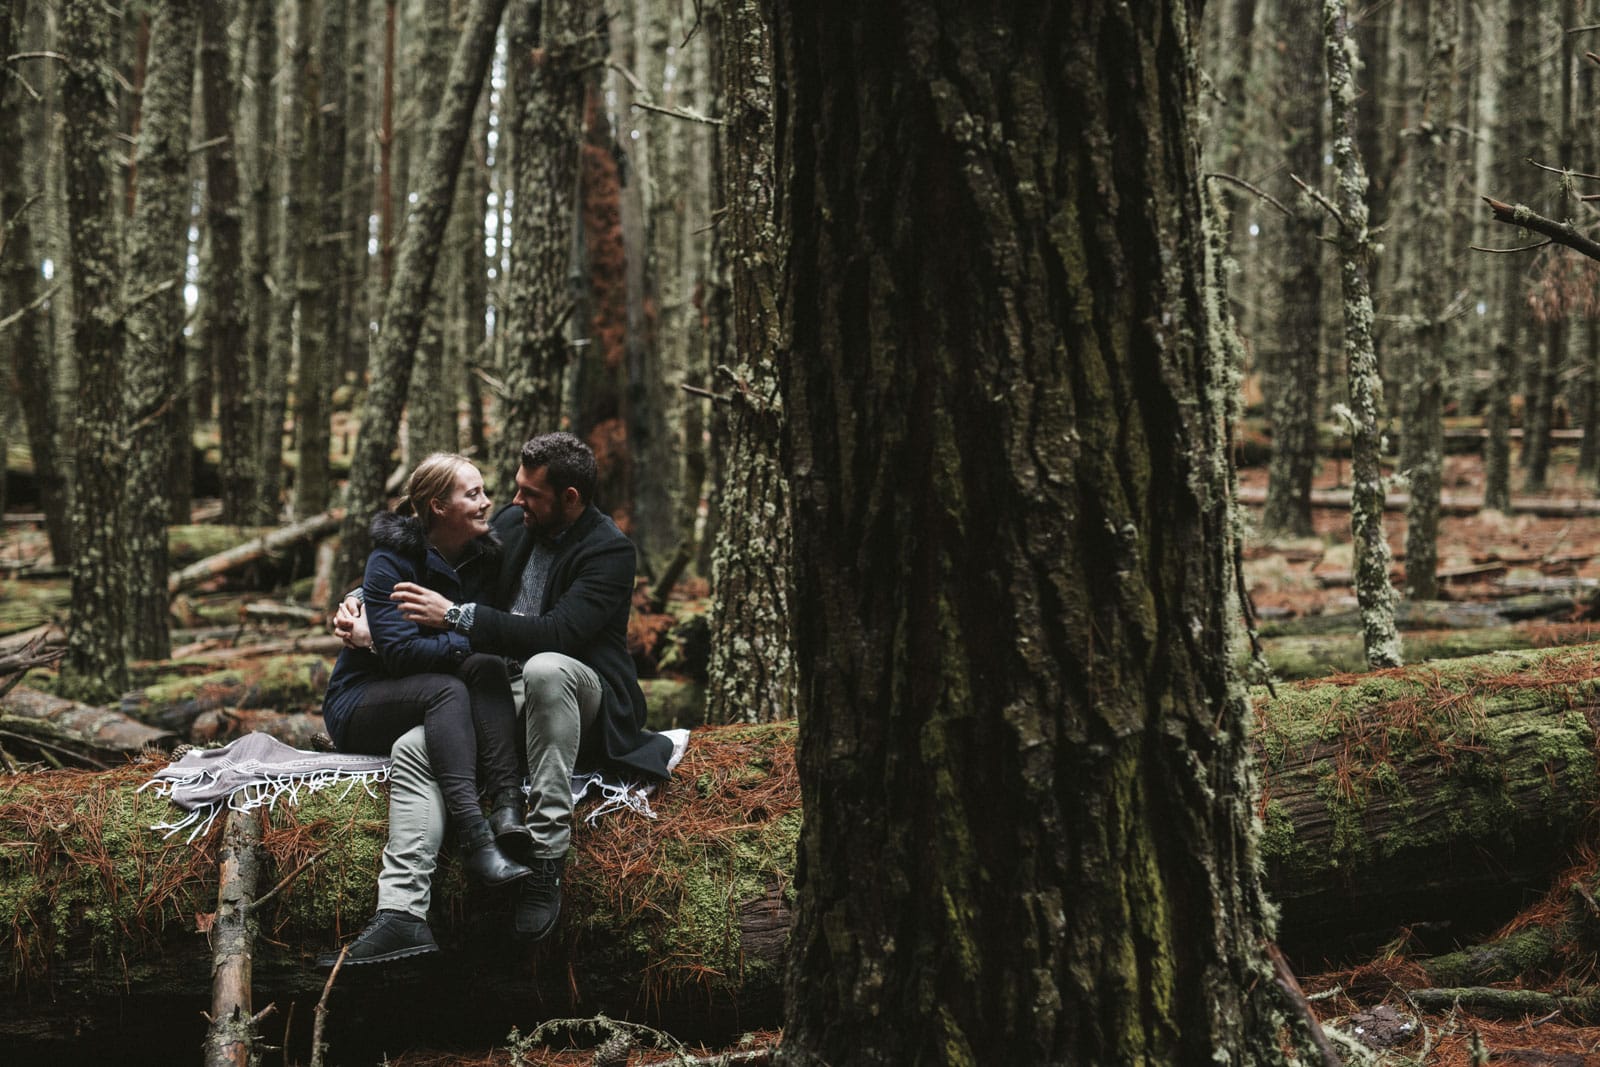 pine forest-Barrington-Tops-engagement-shoot